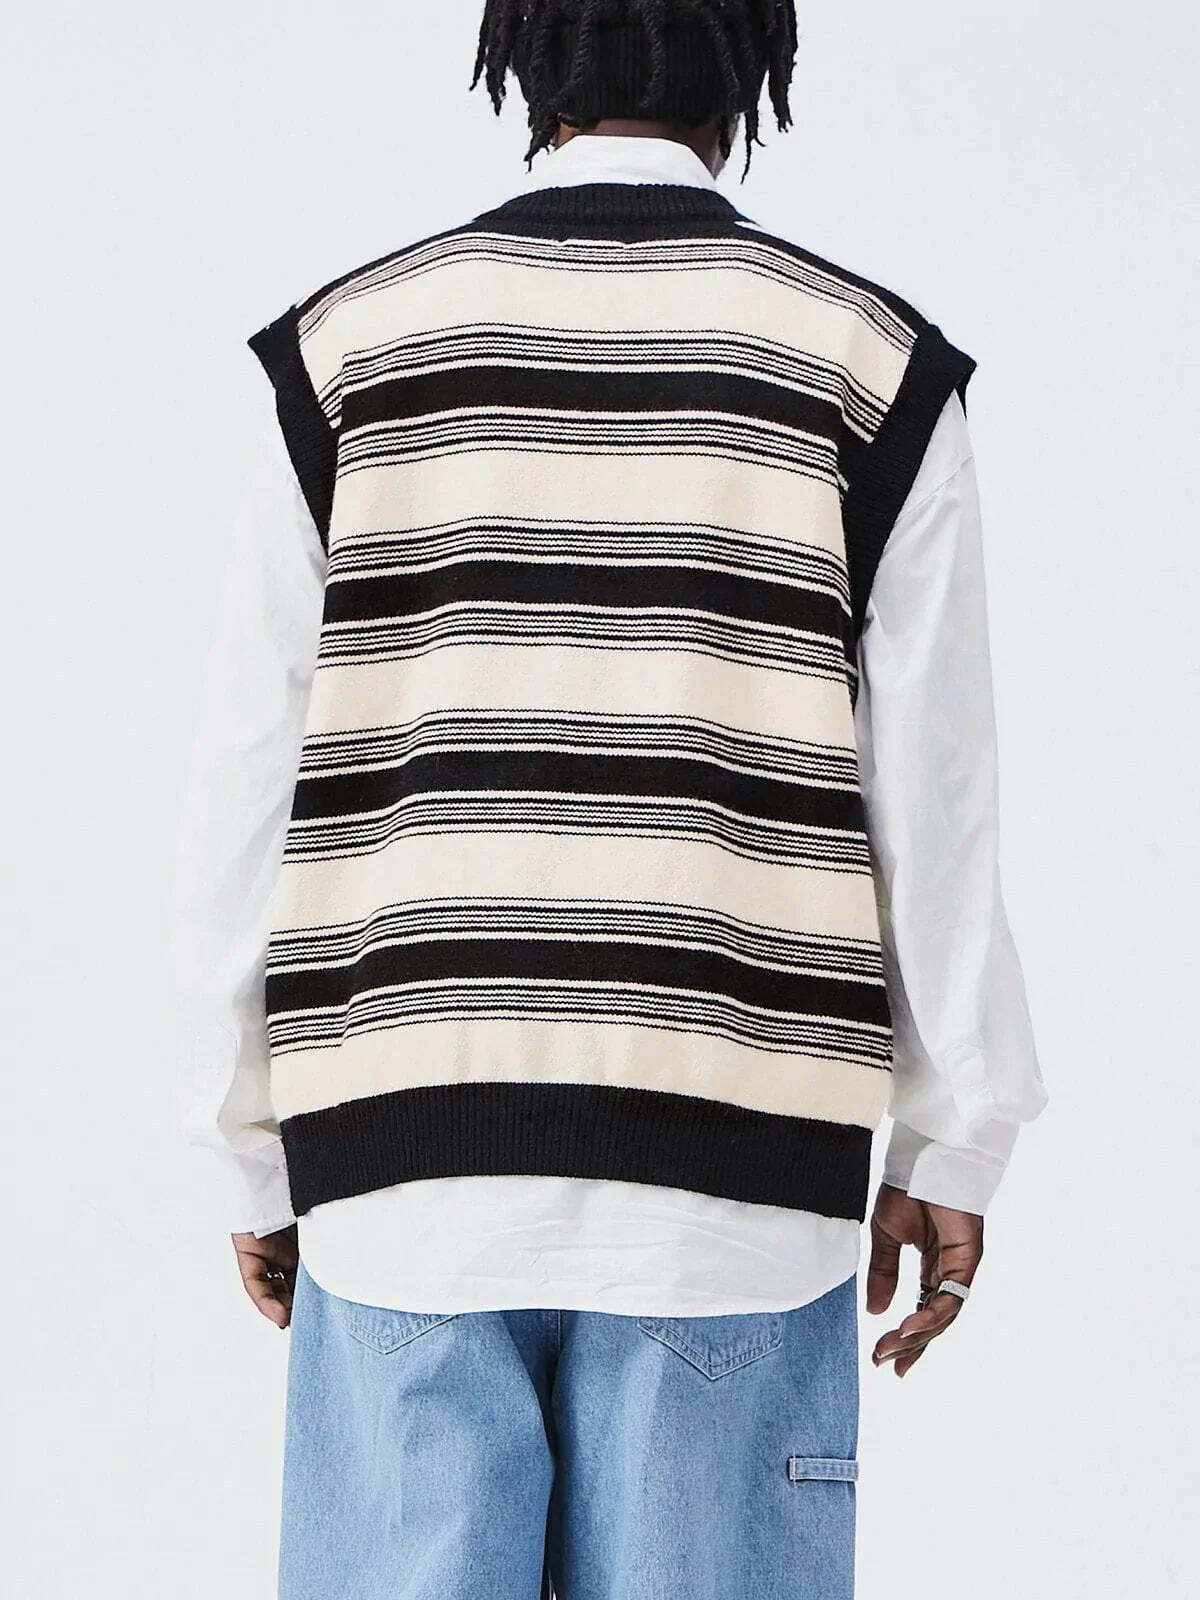 colorblock stripe sweater vest edgy retro statement piece 4259